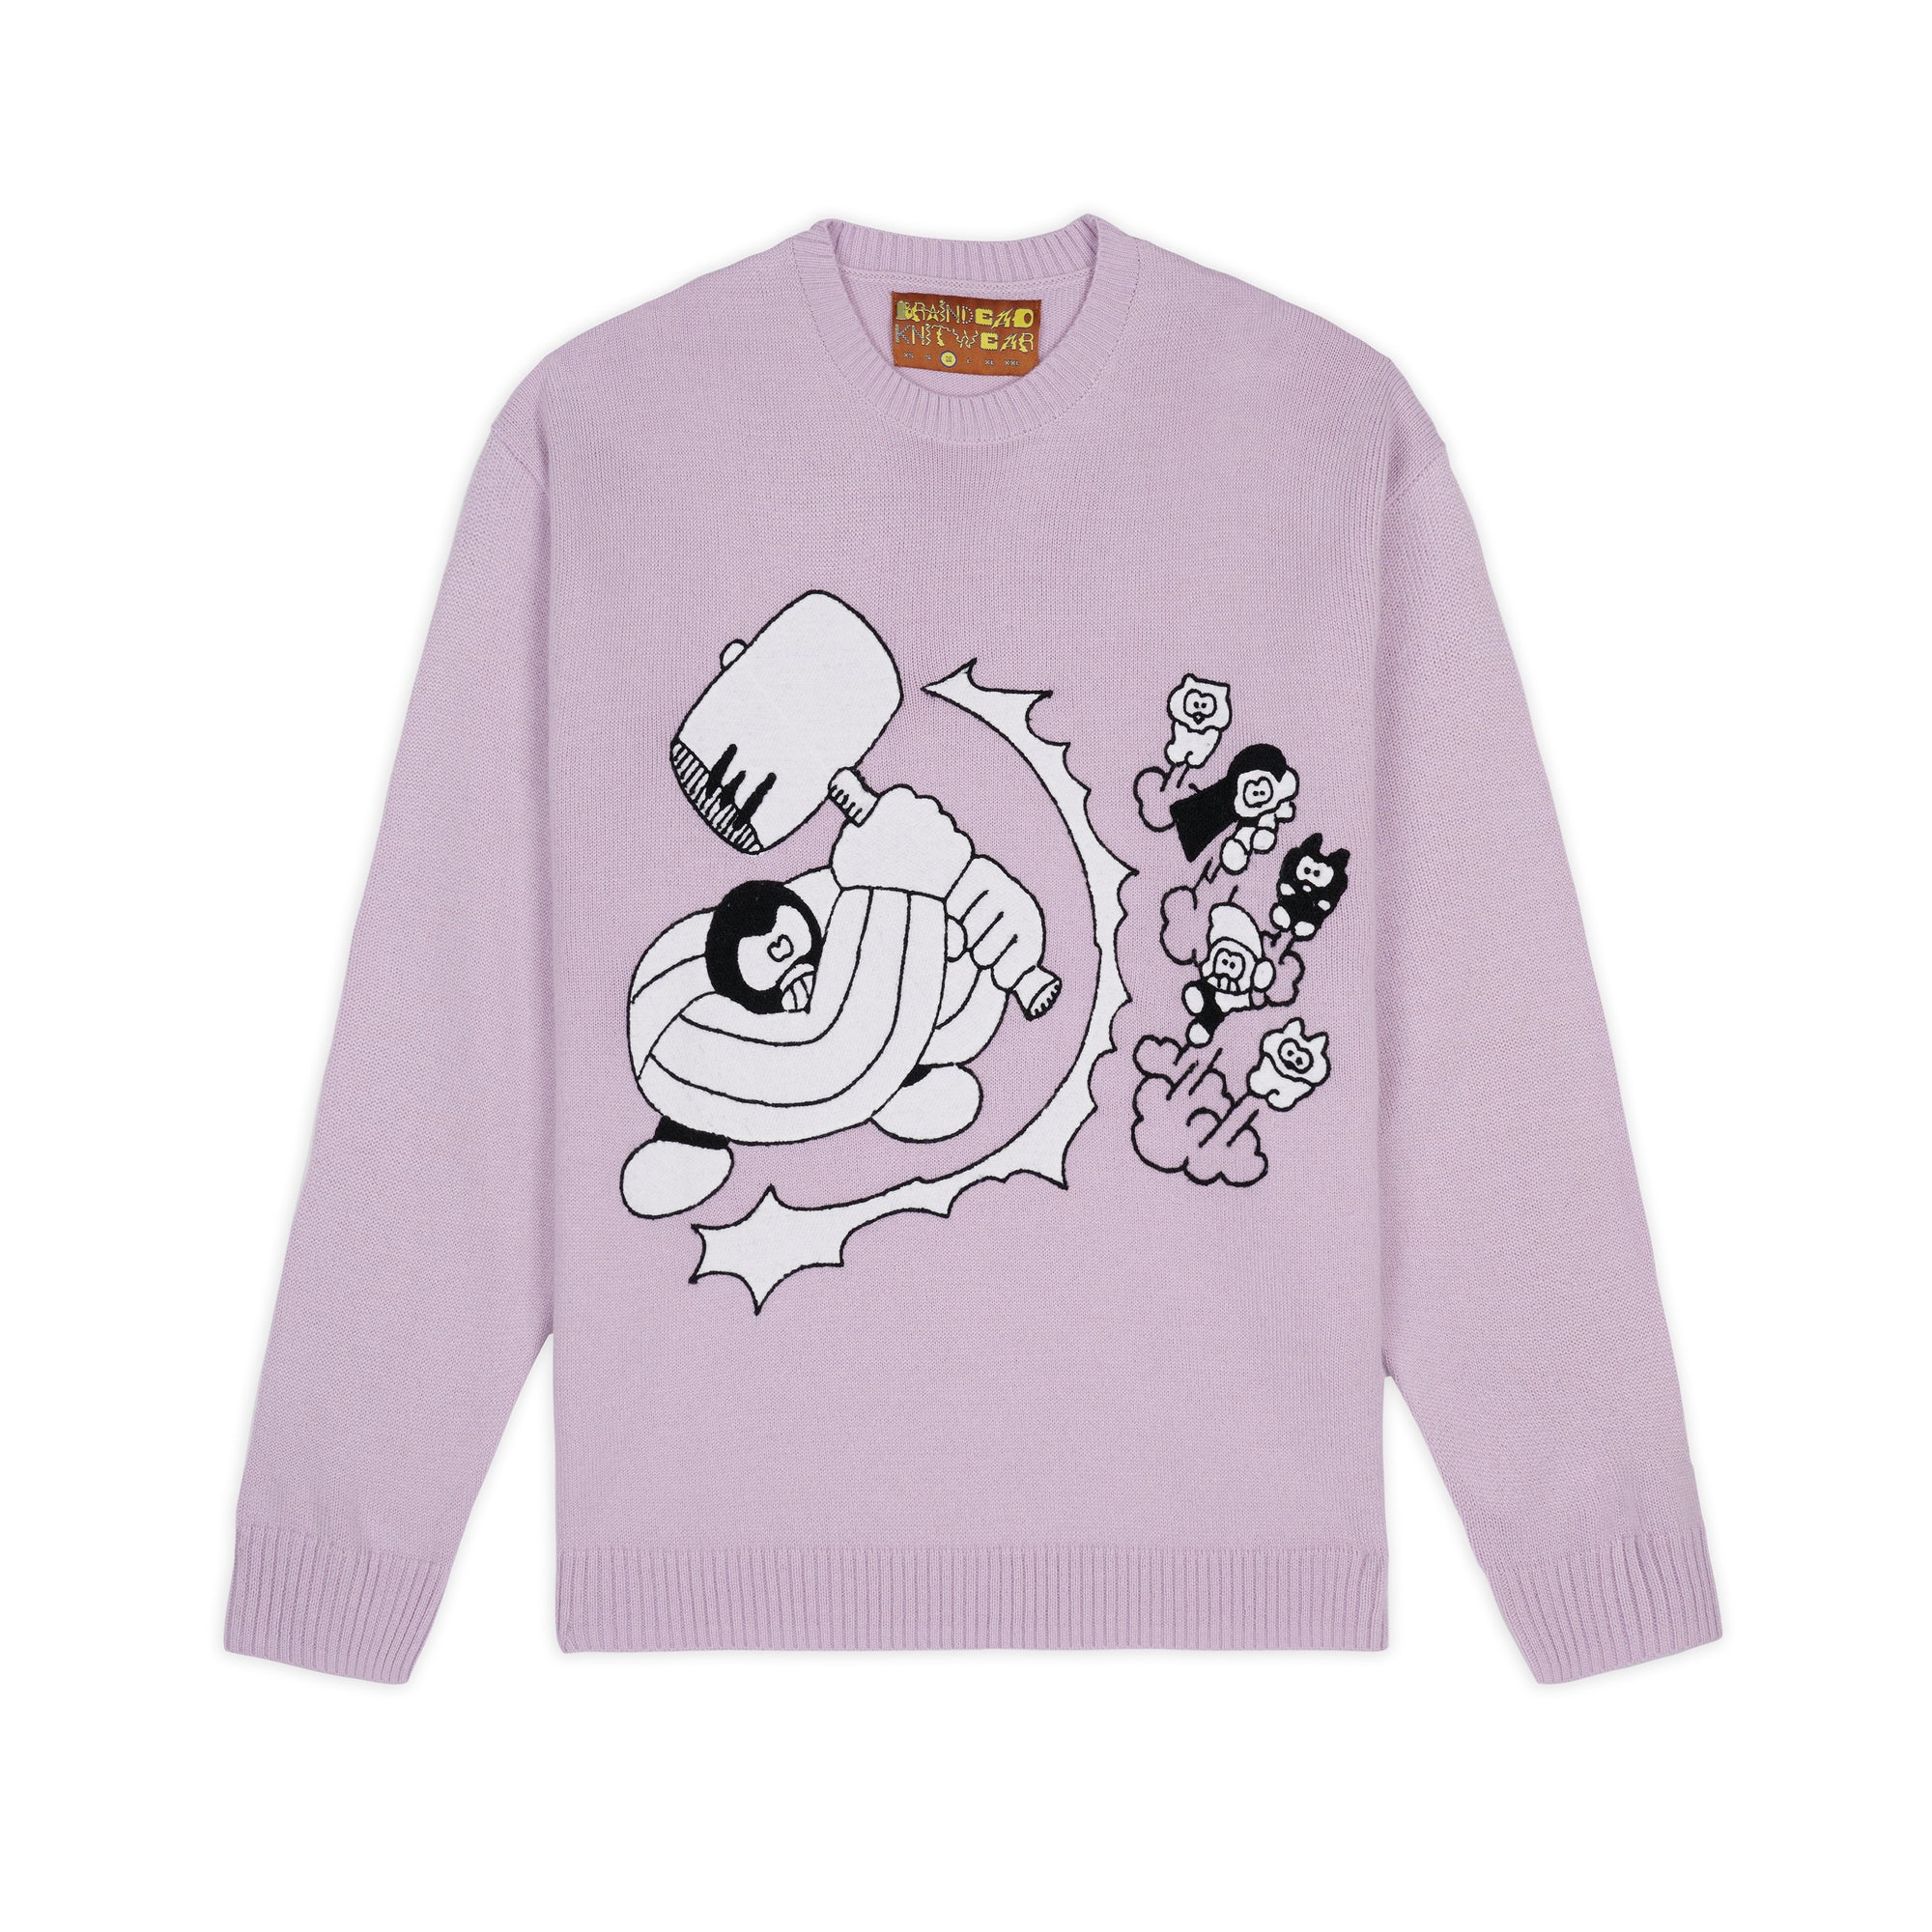 Brain Dead - Men's Hammer Sweater - (Lilac) view 1